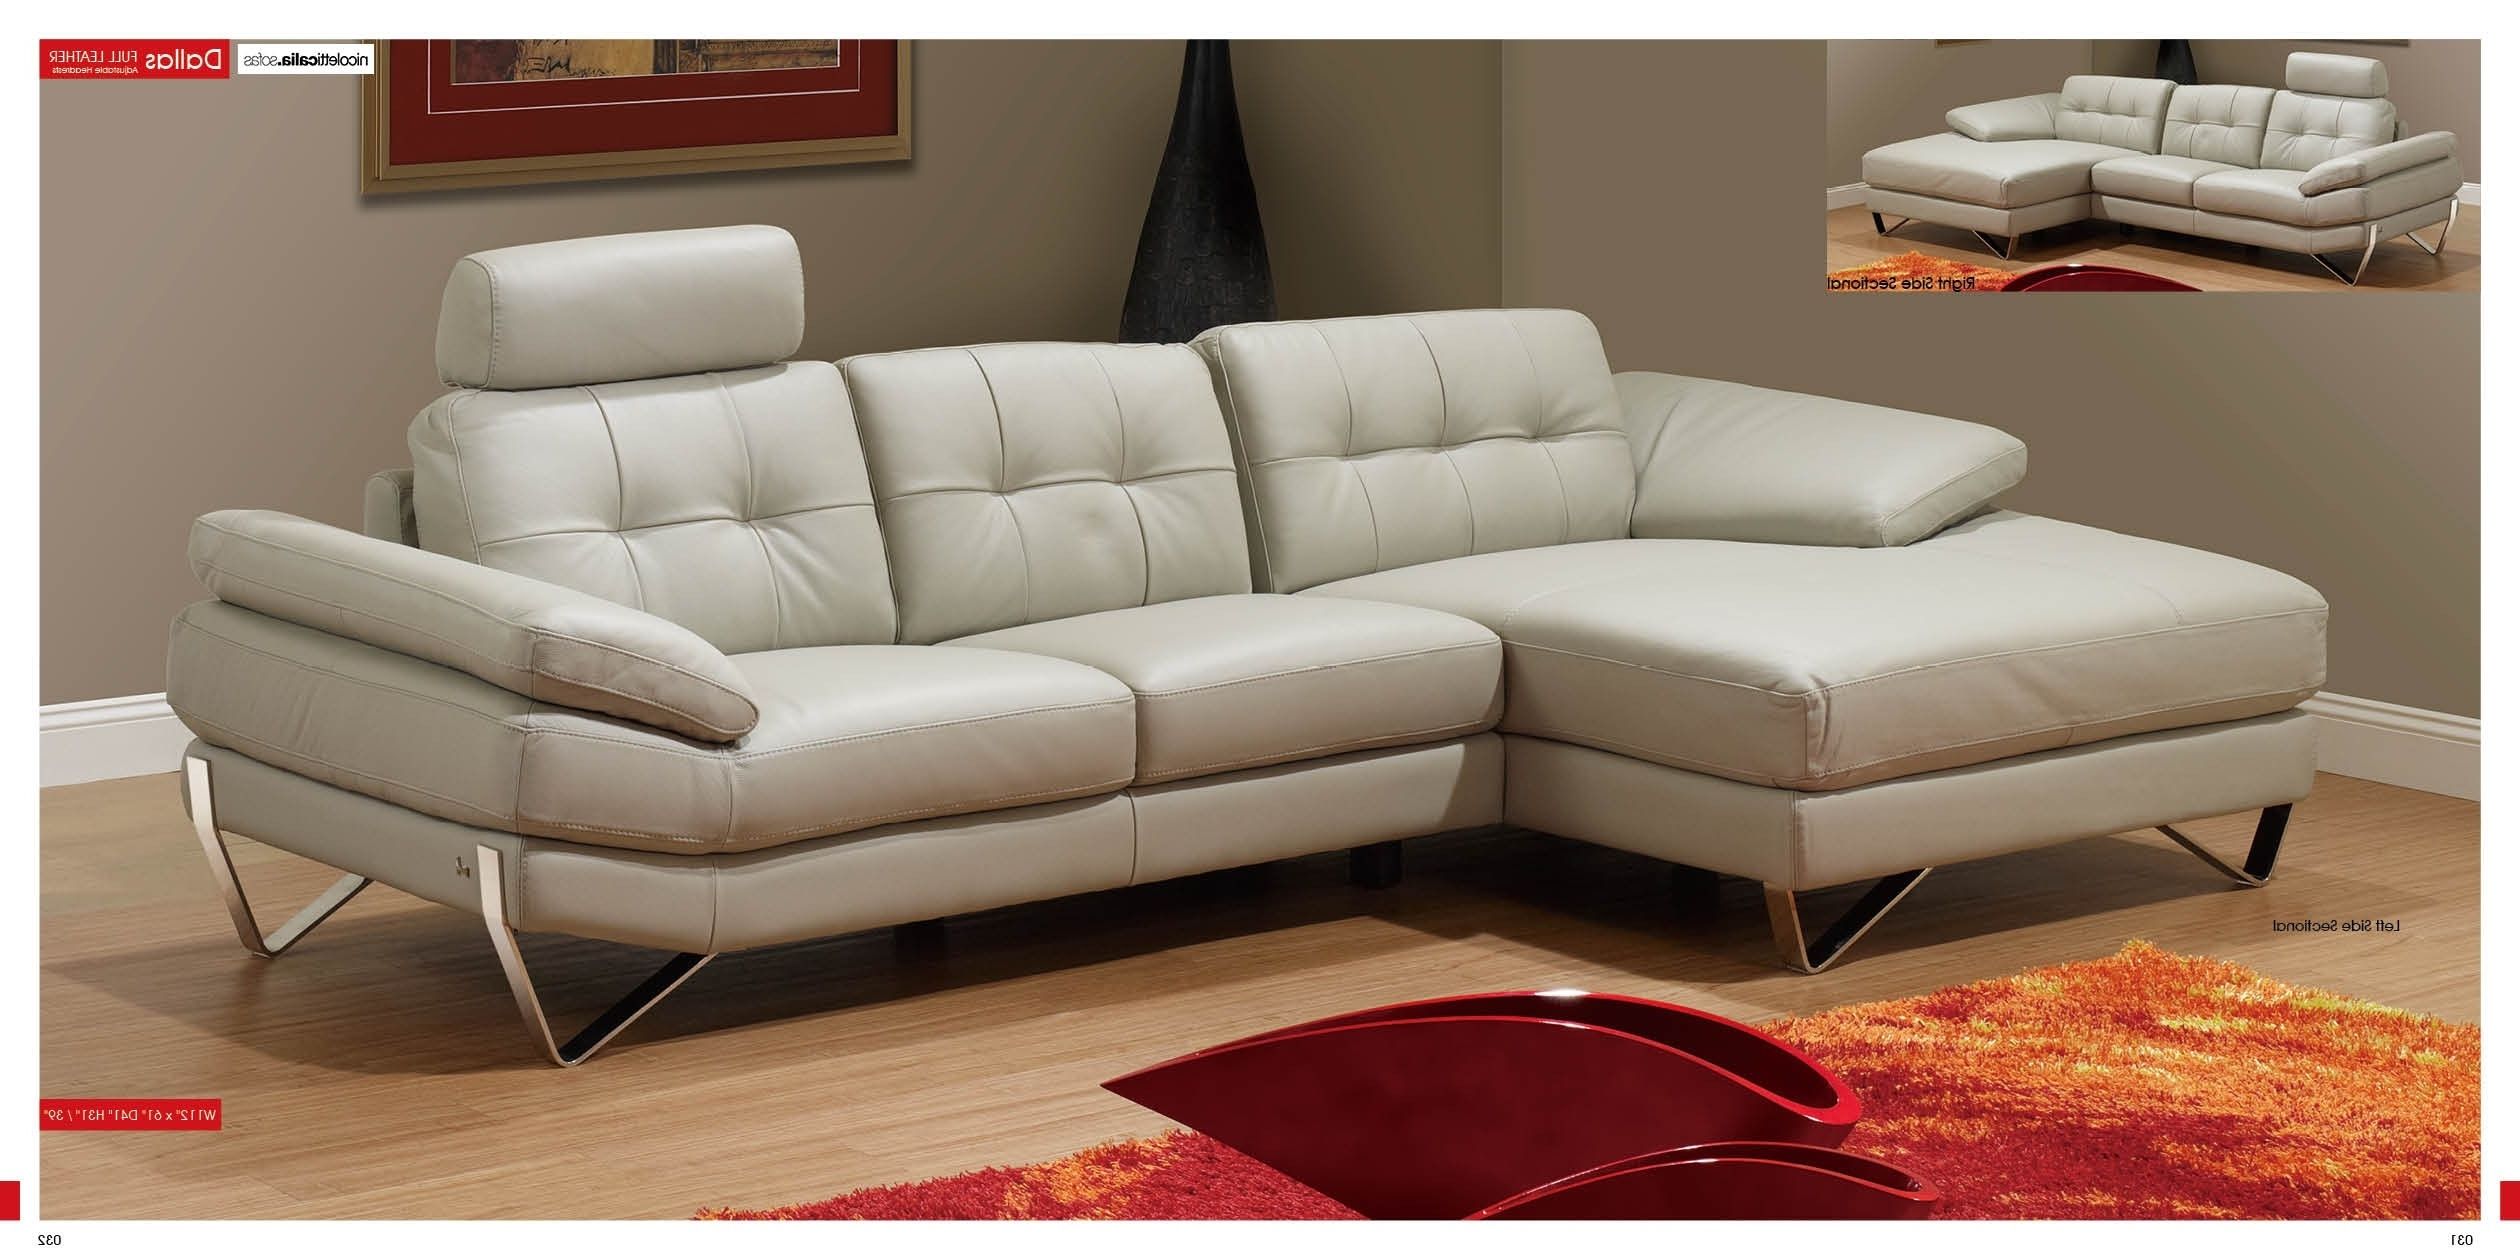 Preferred Furniture & Sofa: Glamorous Interior Furniture Designhavertys Within Sectional Sofas In Savannah Ga (Photo 9 of 15)